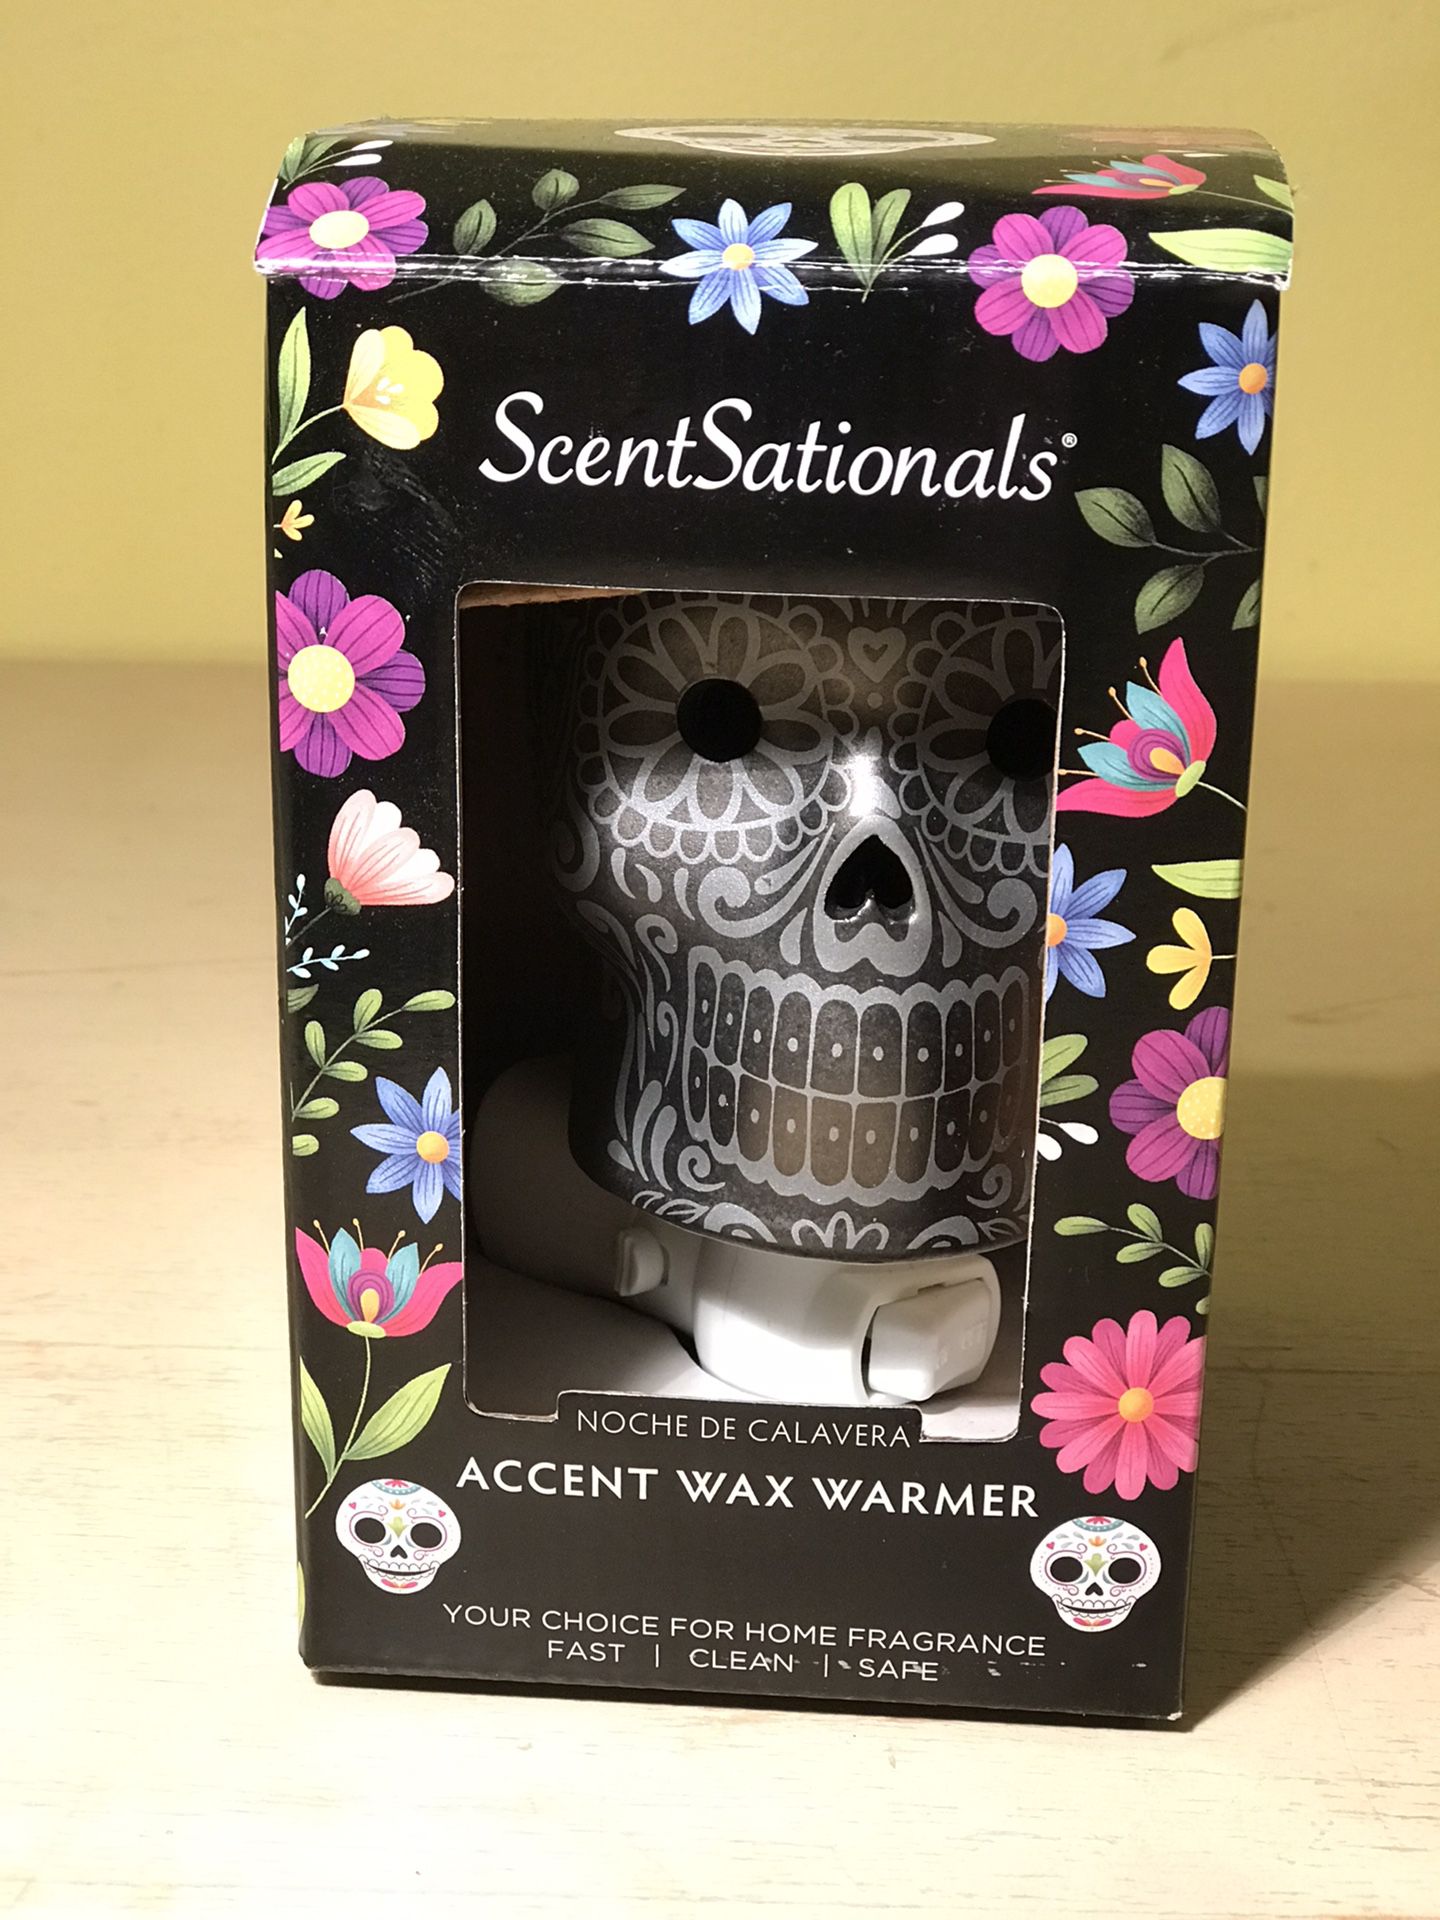 ScentSationals Accent Wax Warmer - Noche De Calavera (New, Open Package)